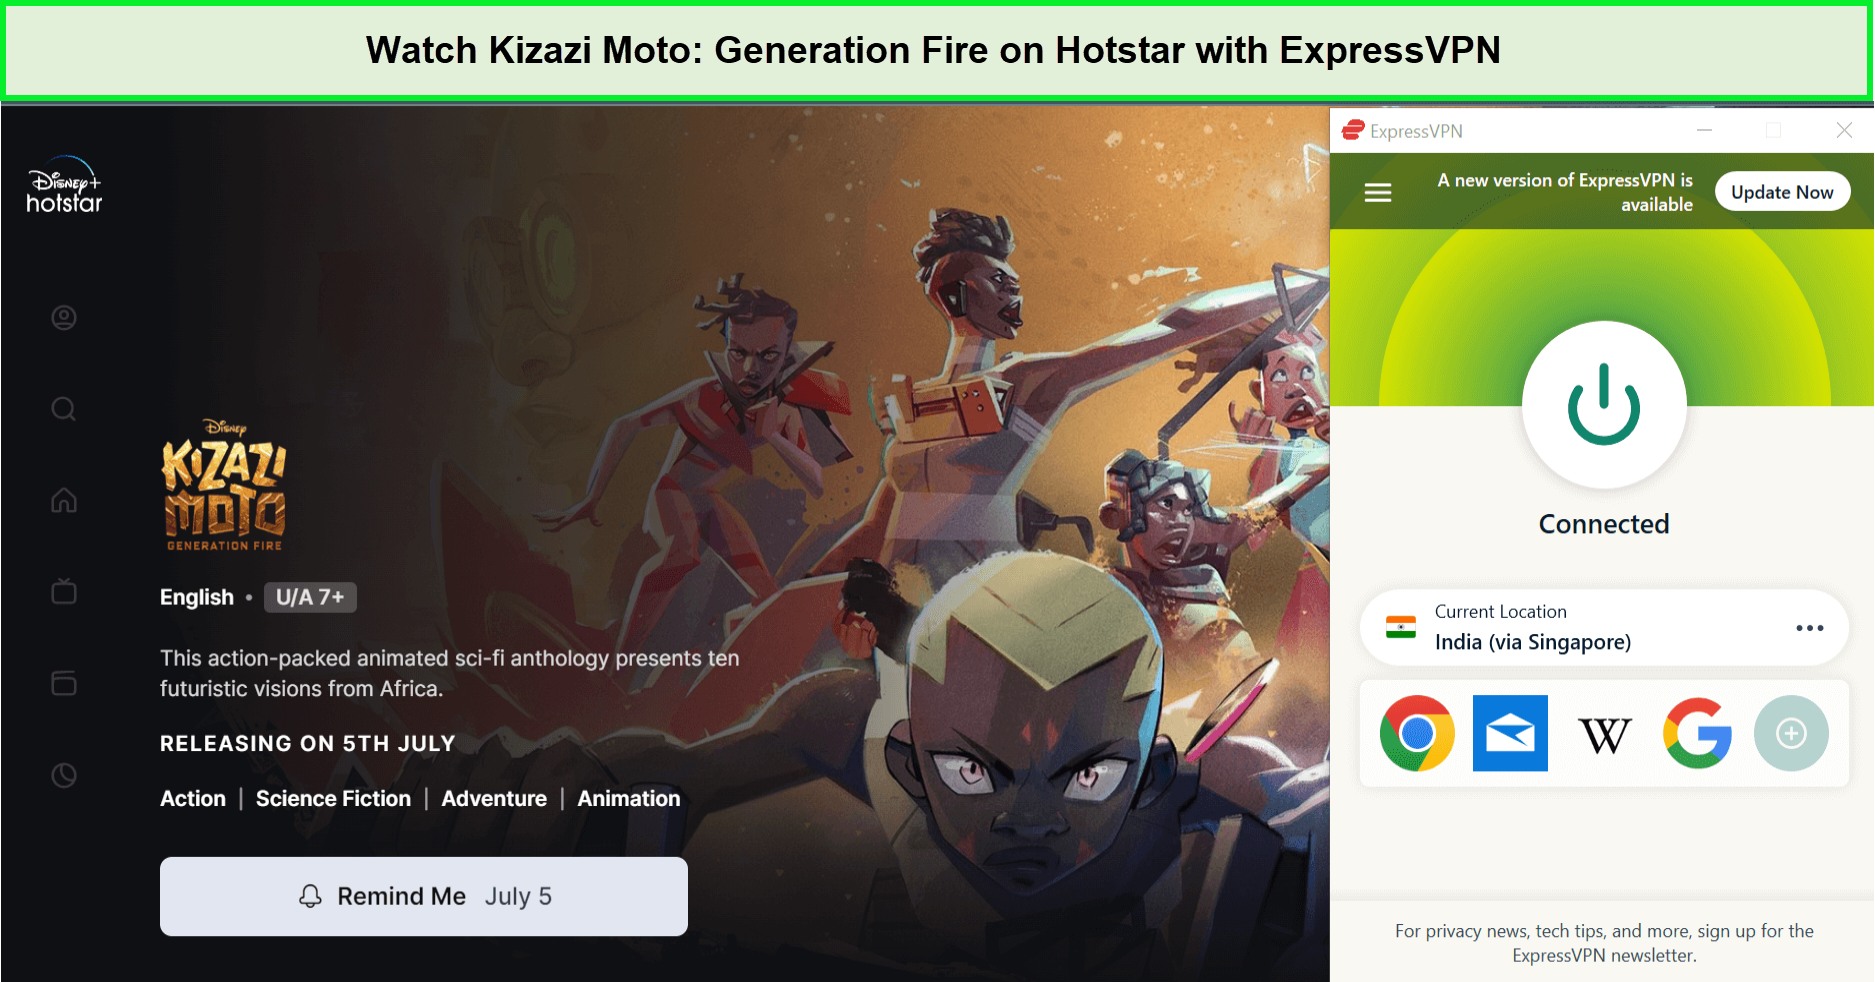 Watch-Kizazi-Moto-Generation-Fire-in-USA-on-Hotstar-with-ExpressVPN